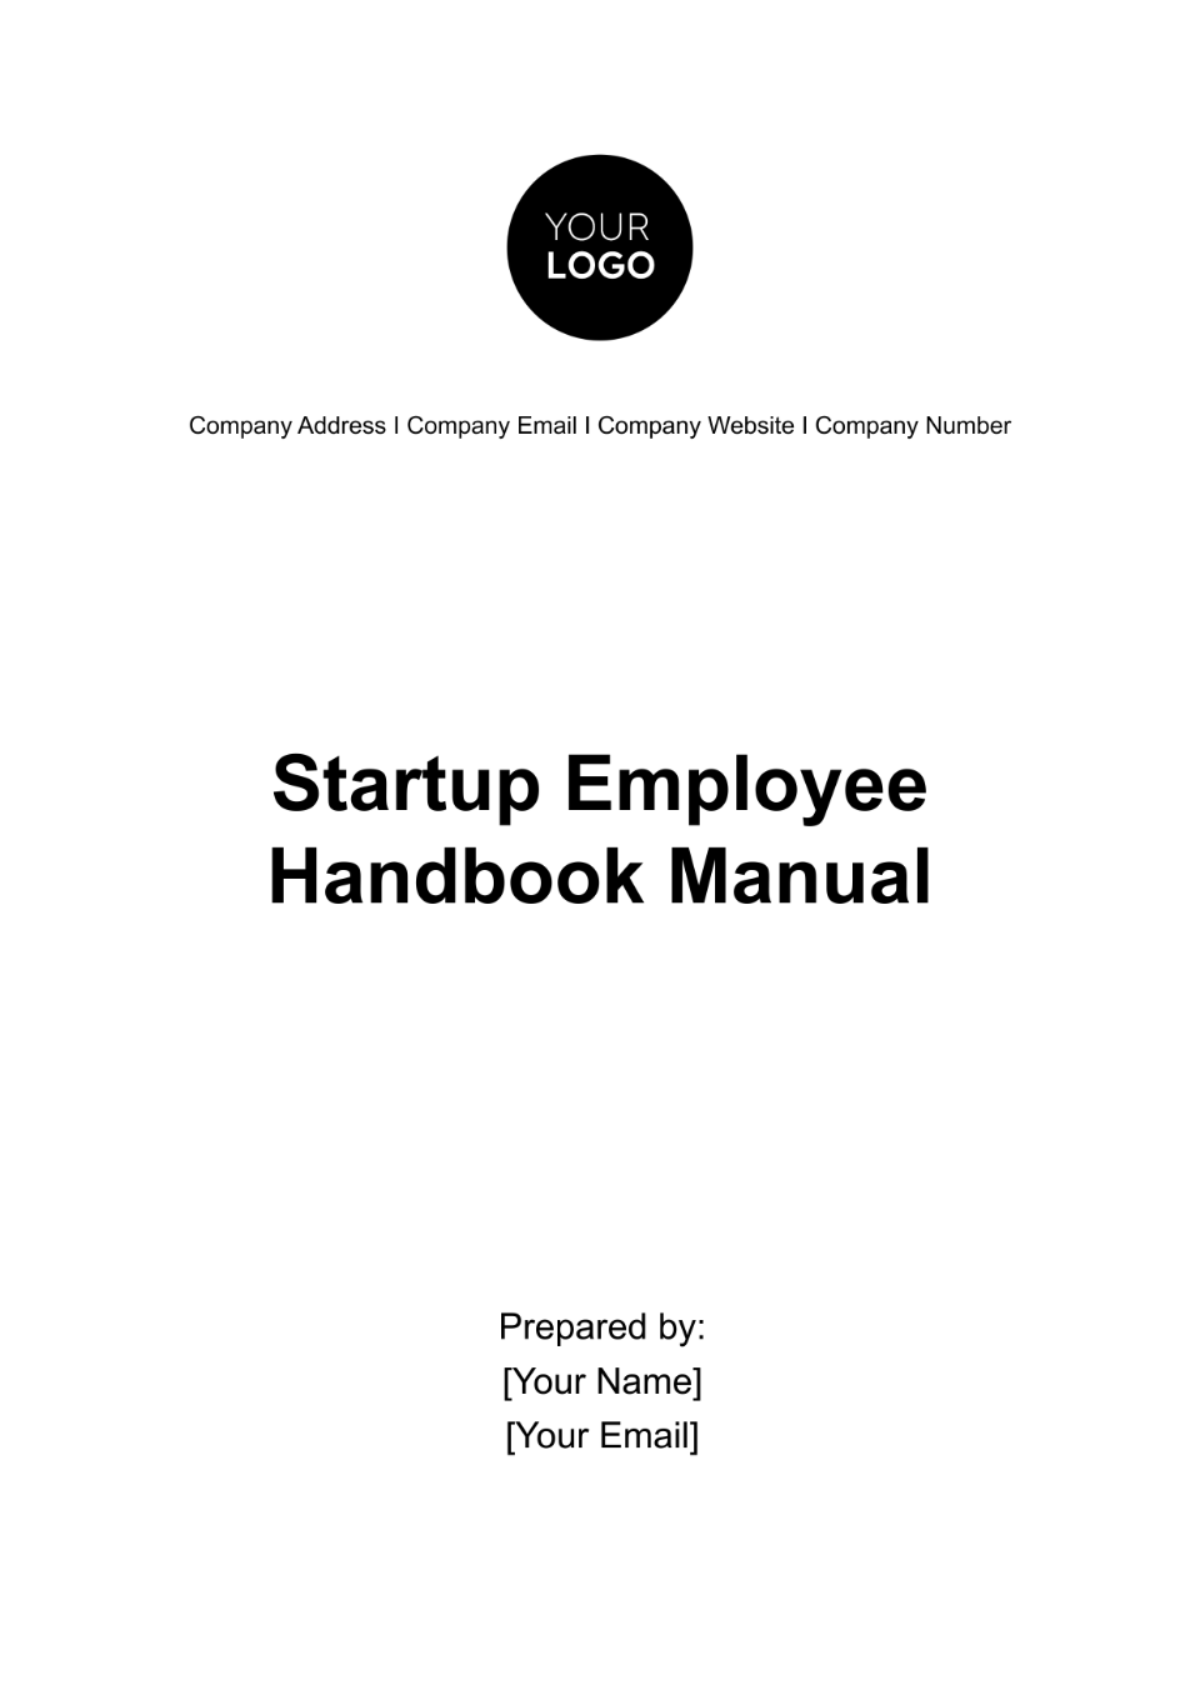 Startup Employee Handbook Manual Template